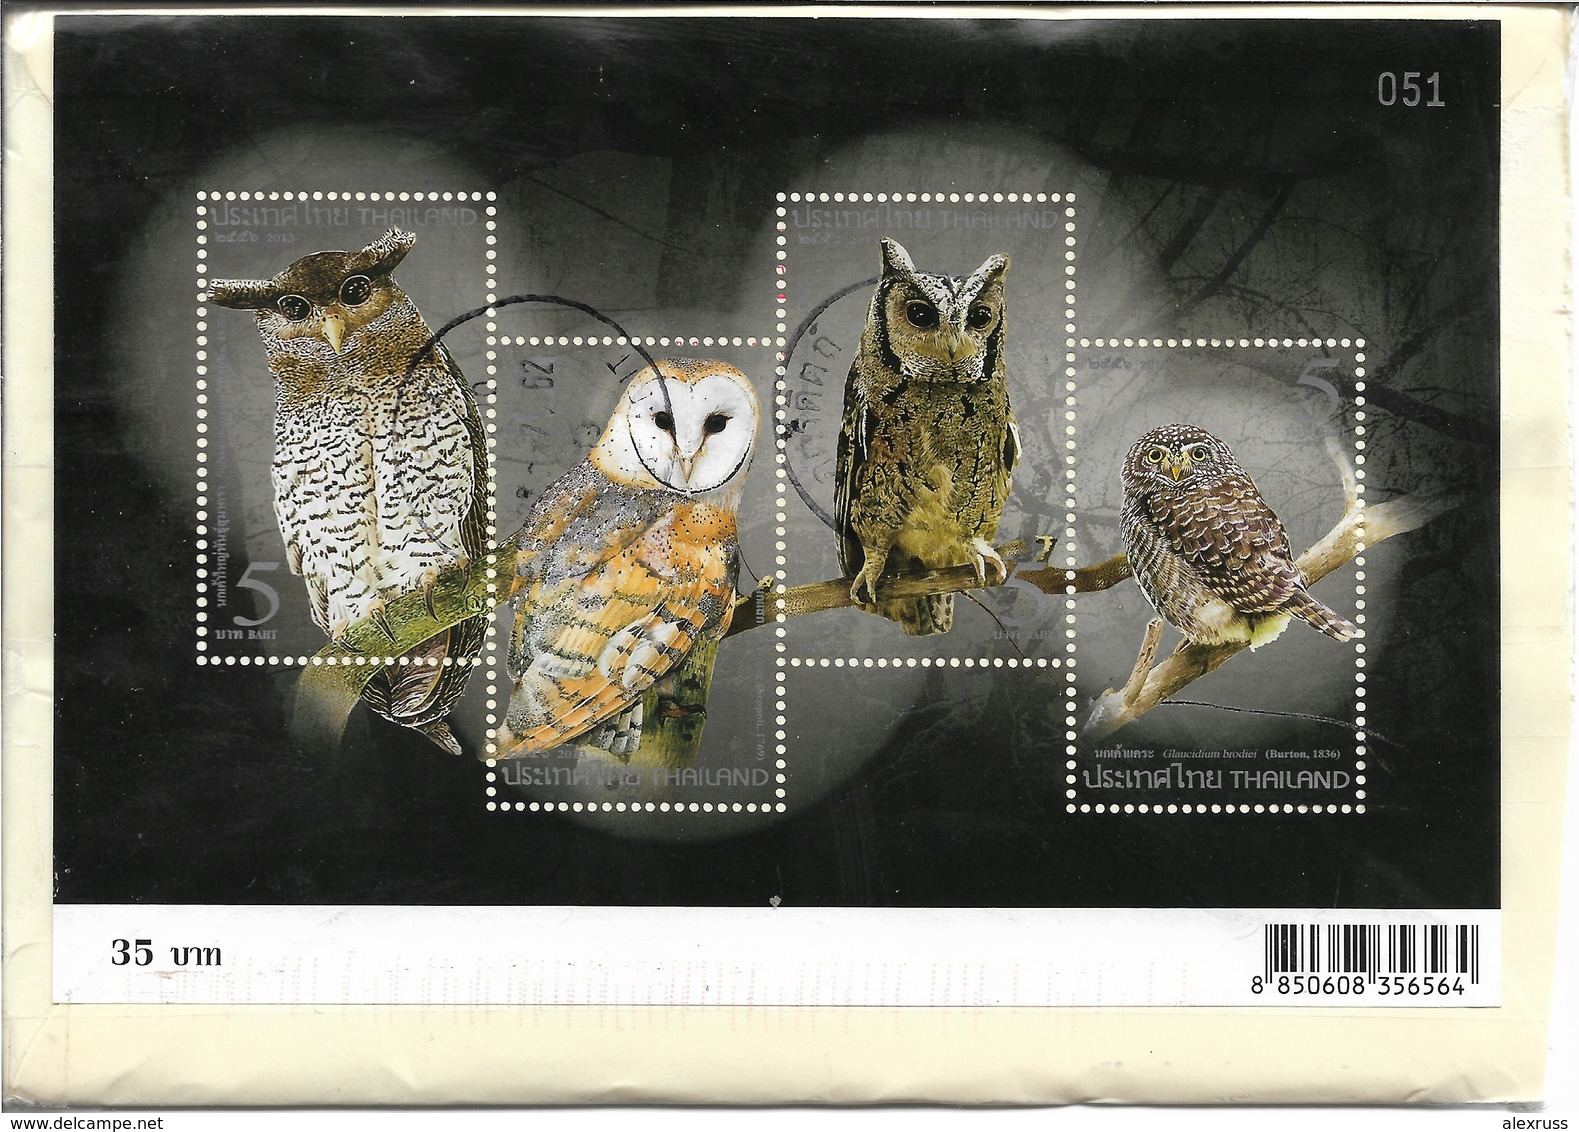 Thailand Birds 2003 Roosters, 2013 Owls Souvenir Sheet, VF Post Cover (RN-50) - Thailand